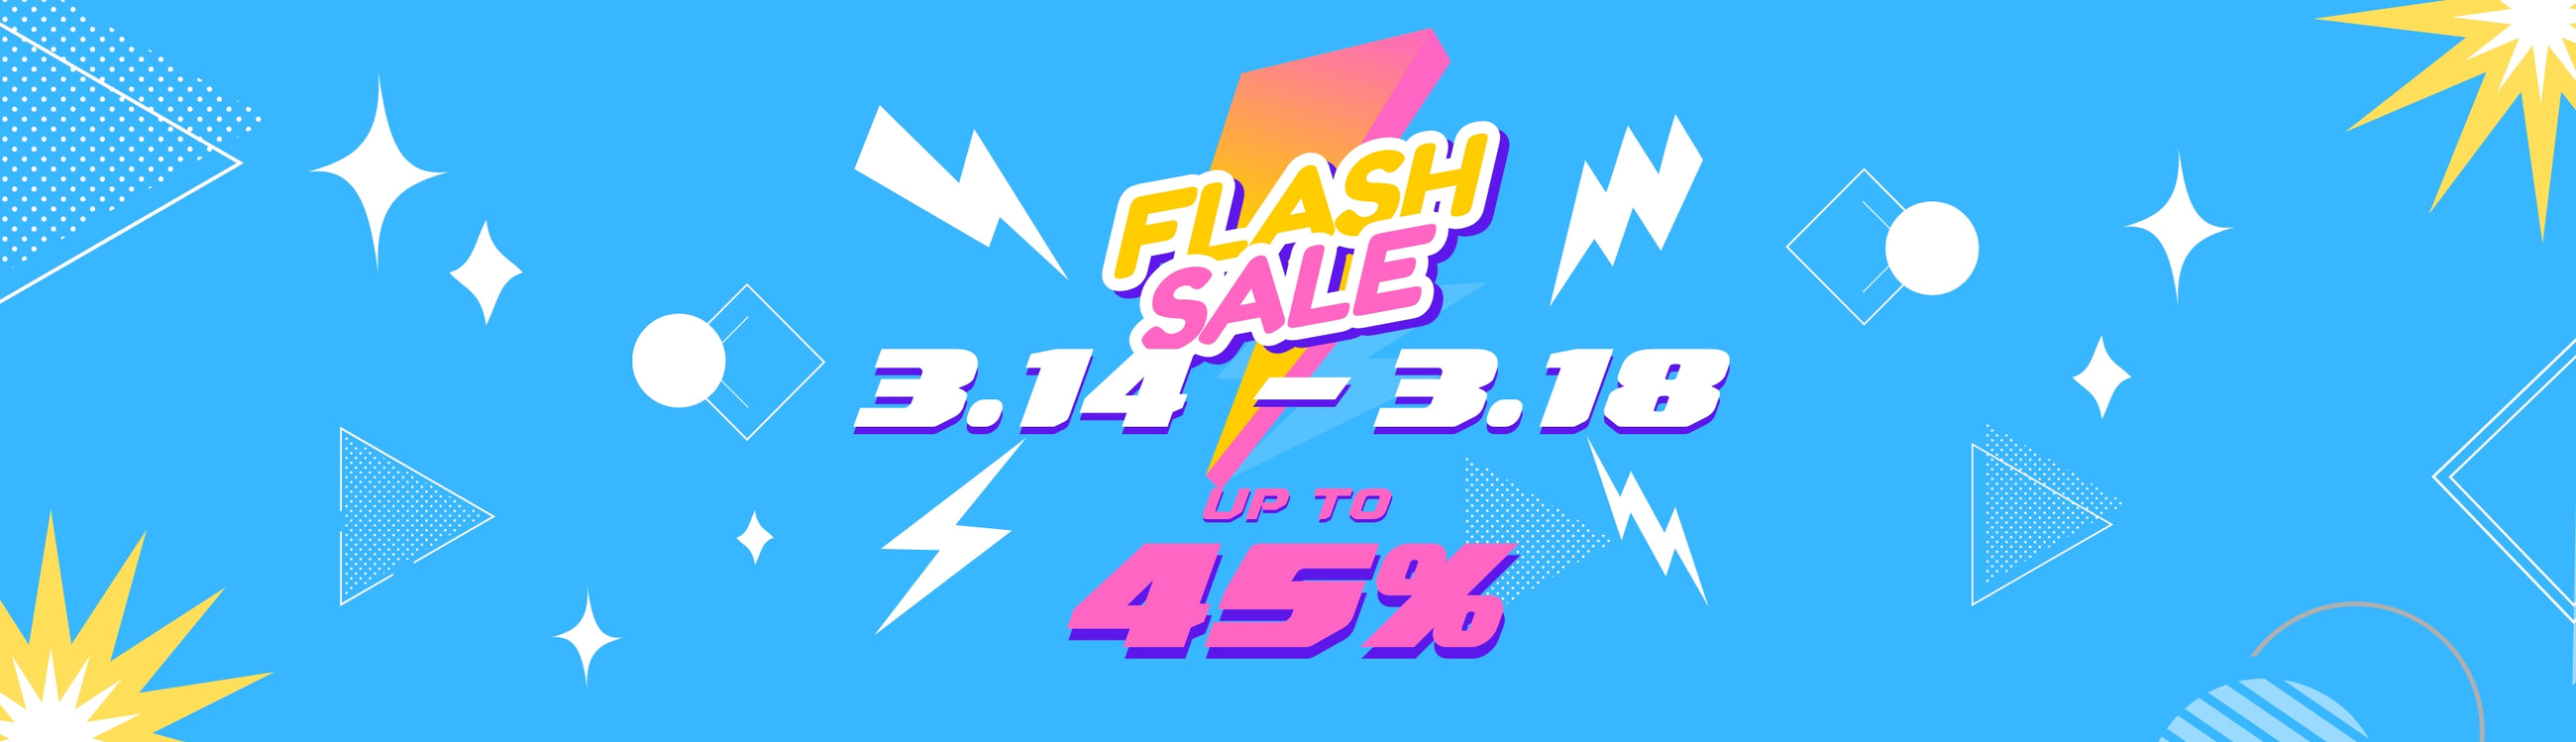 Clearance Flash Sale